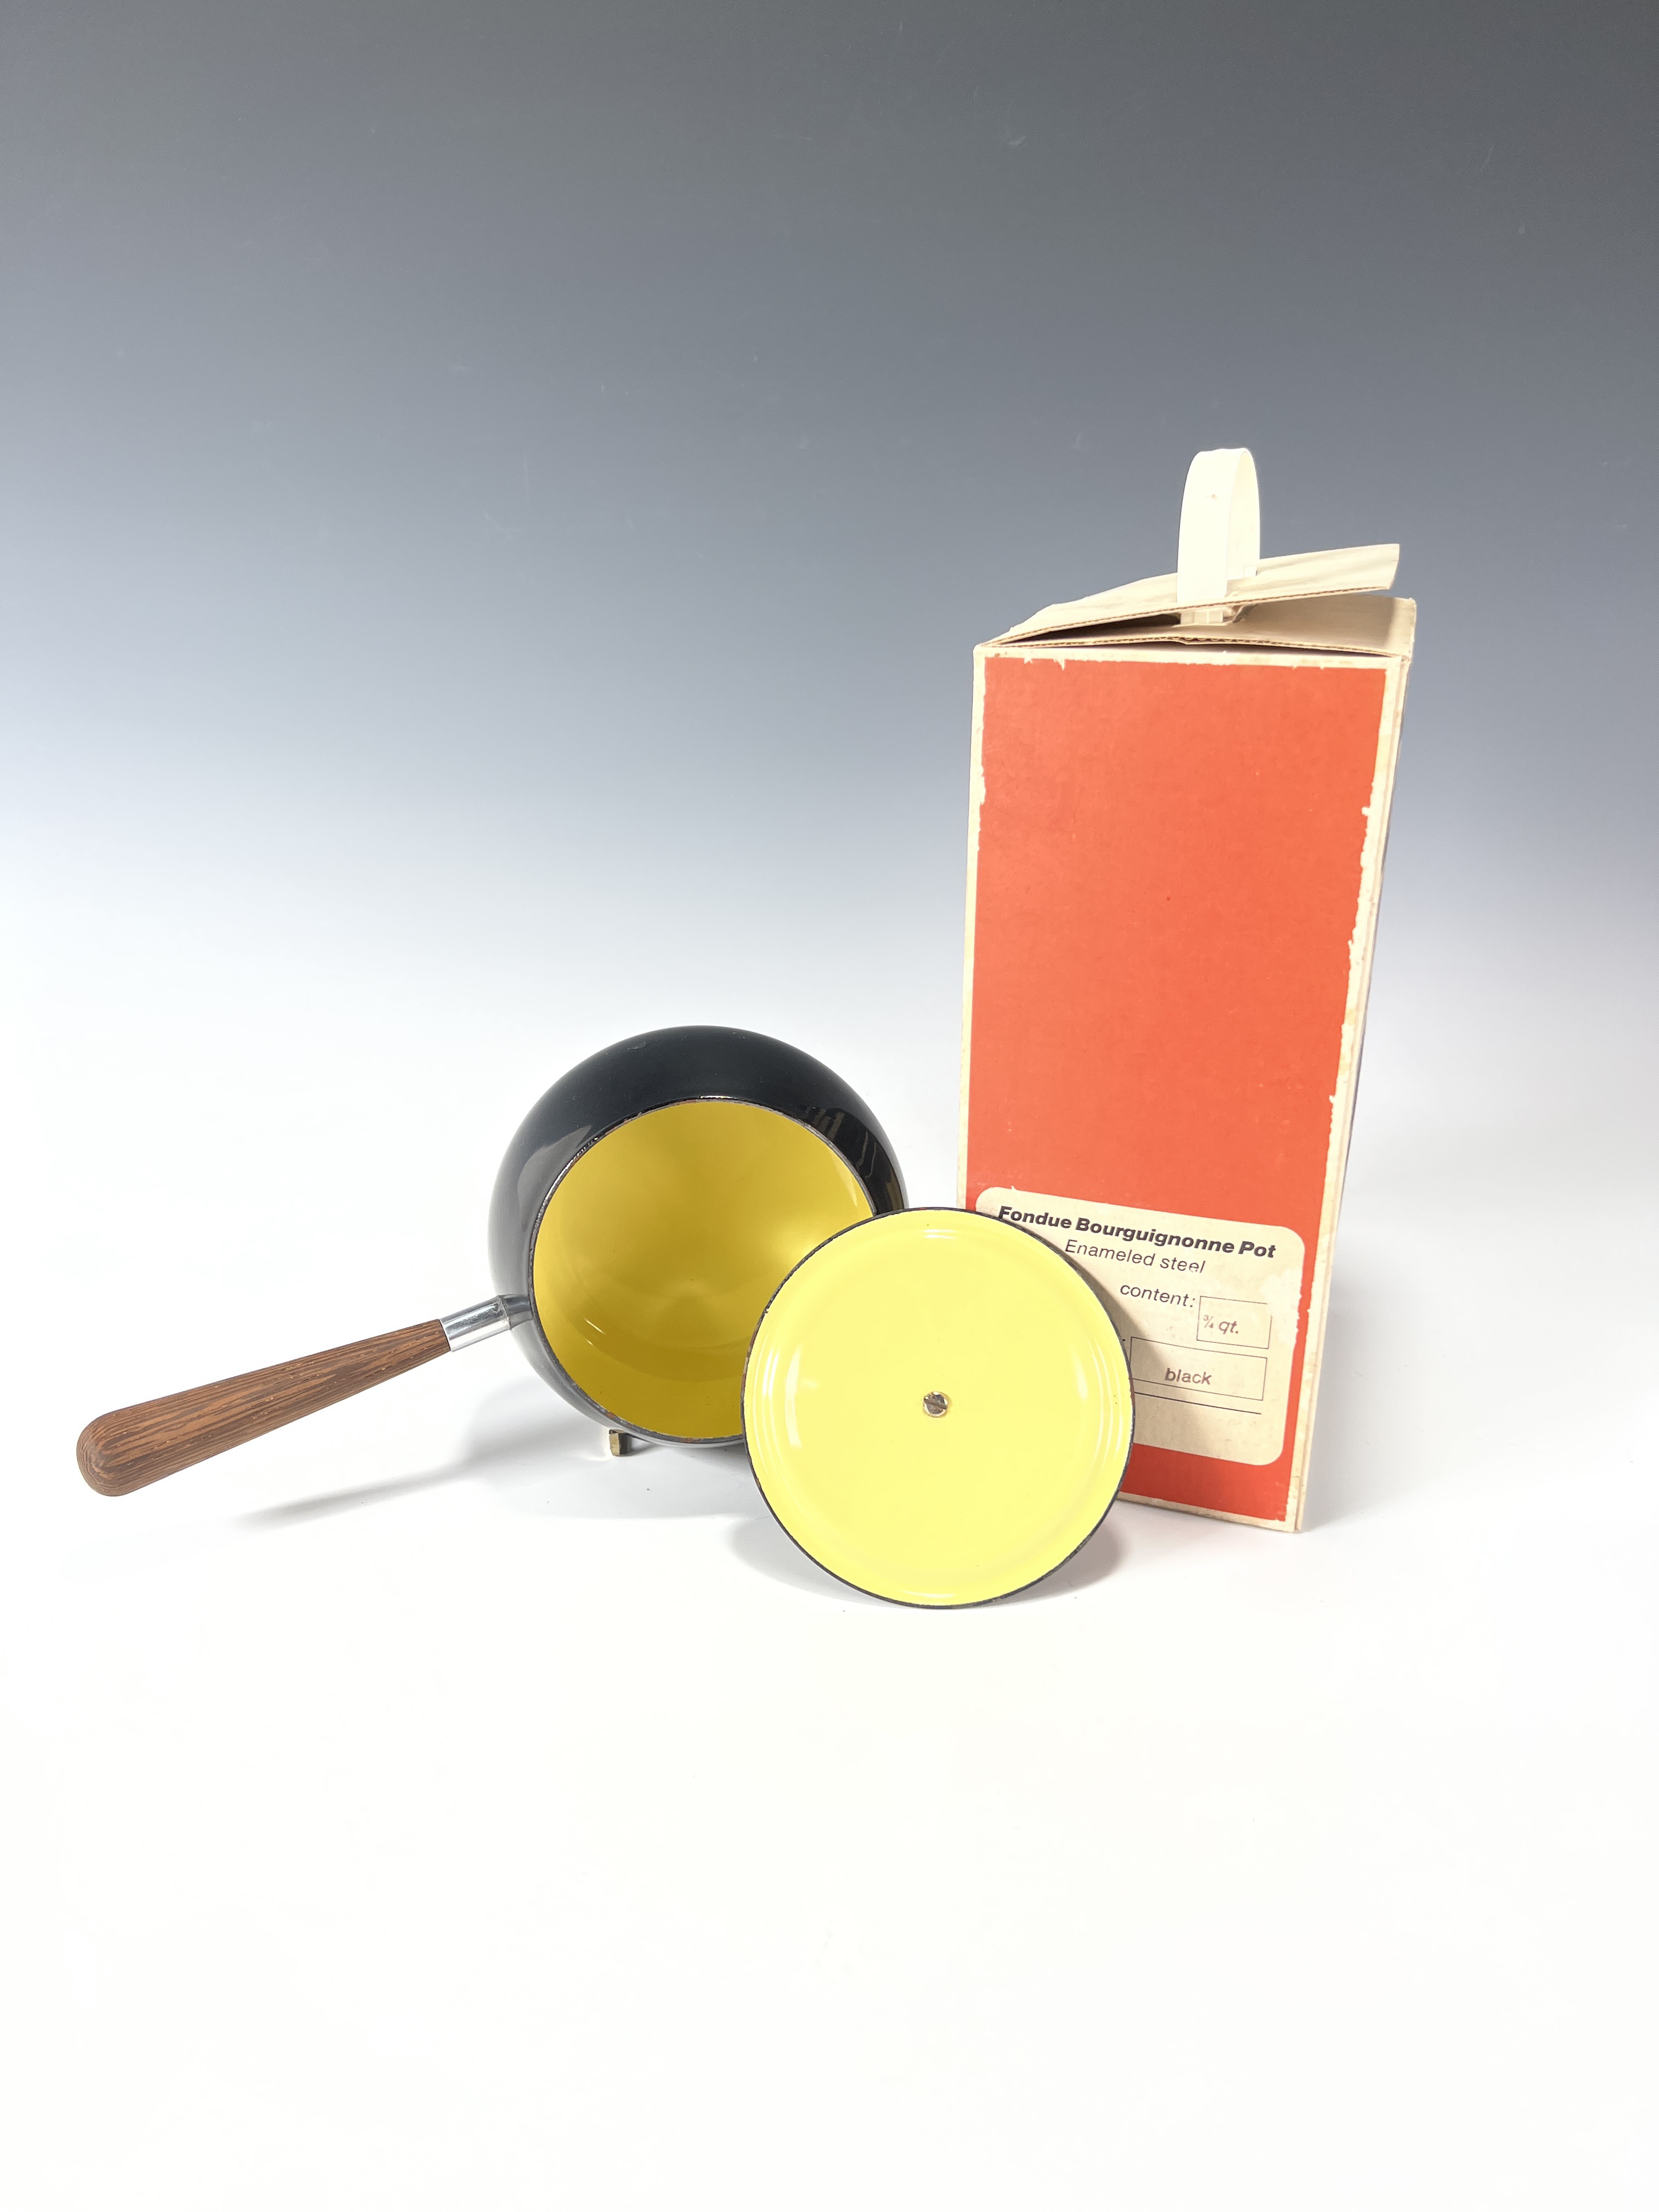 Mcm Lantern Decanter Music Box & Fondue Pot In Box image 4